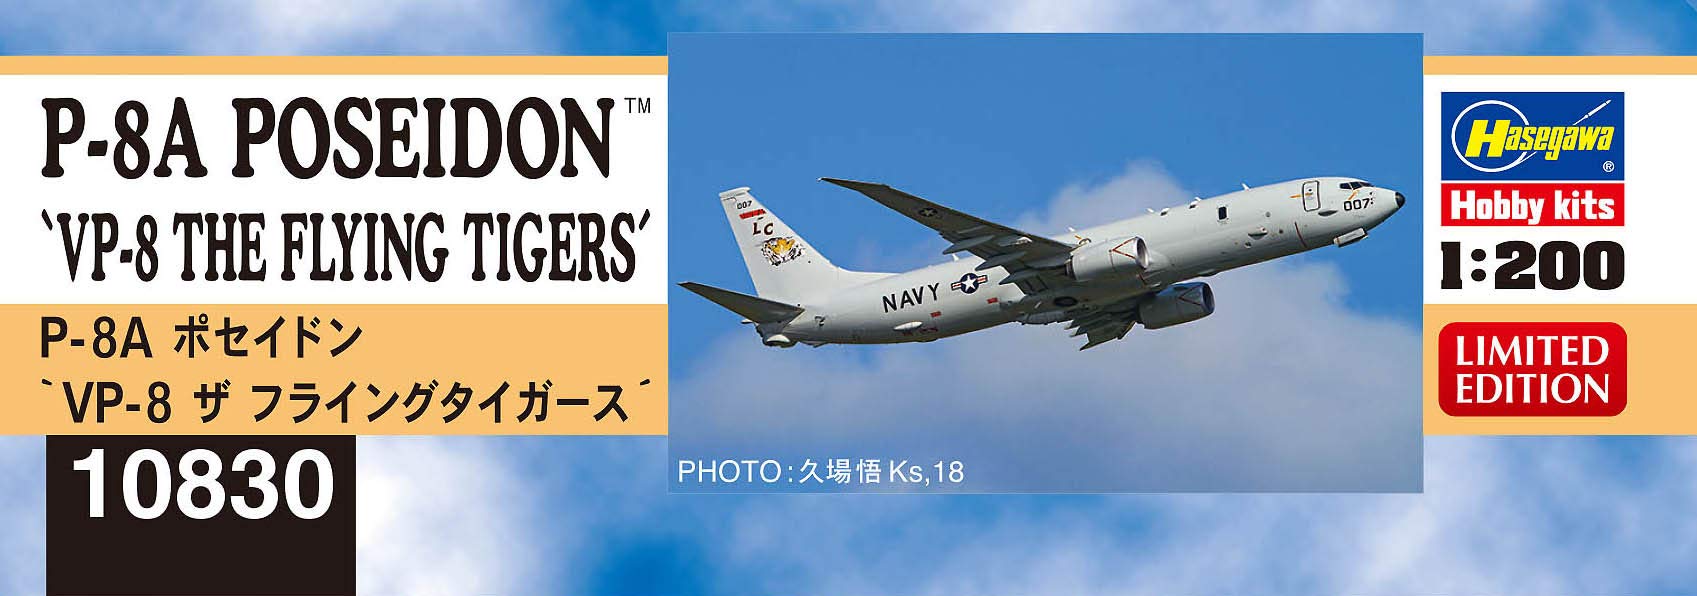 HASEGAWA 10830 'The Flying Tigers' P-8A Poseidon Vp-8 1/200 Scale Kit